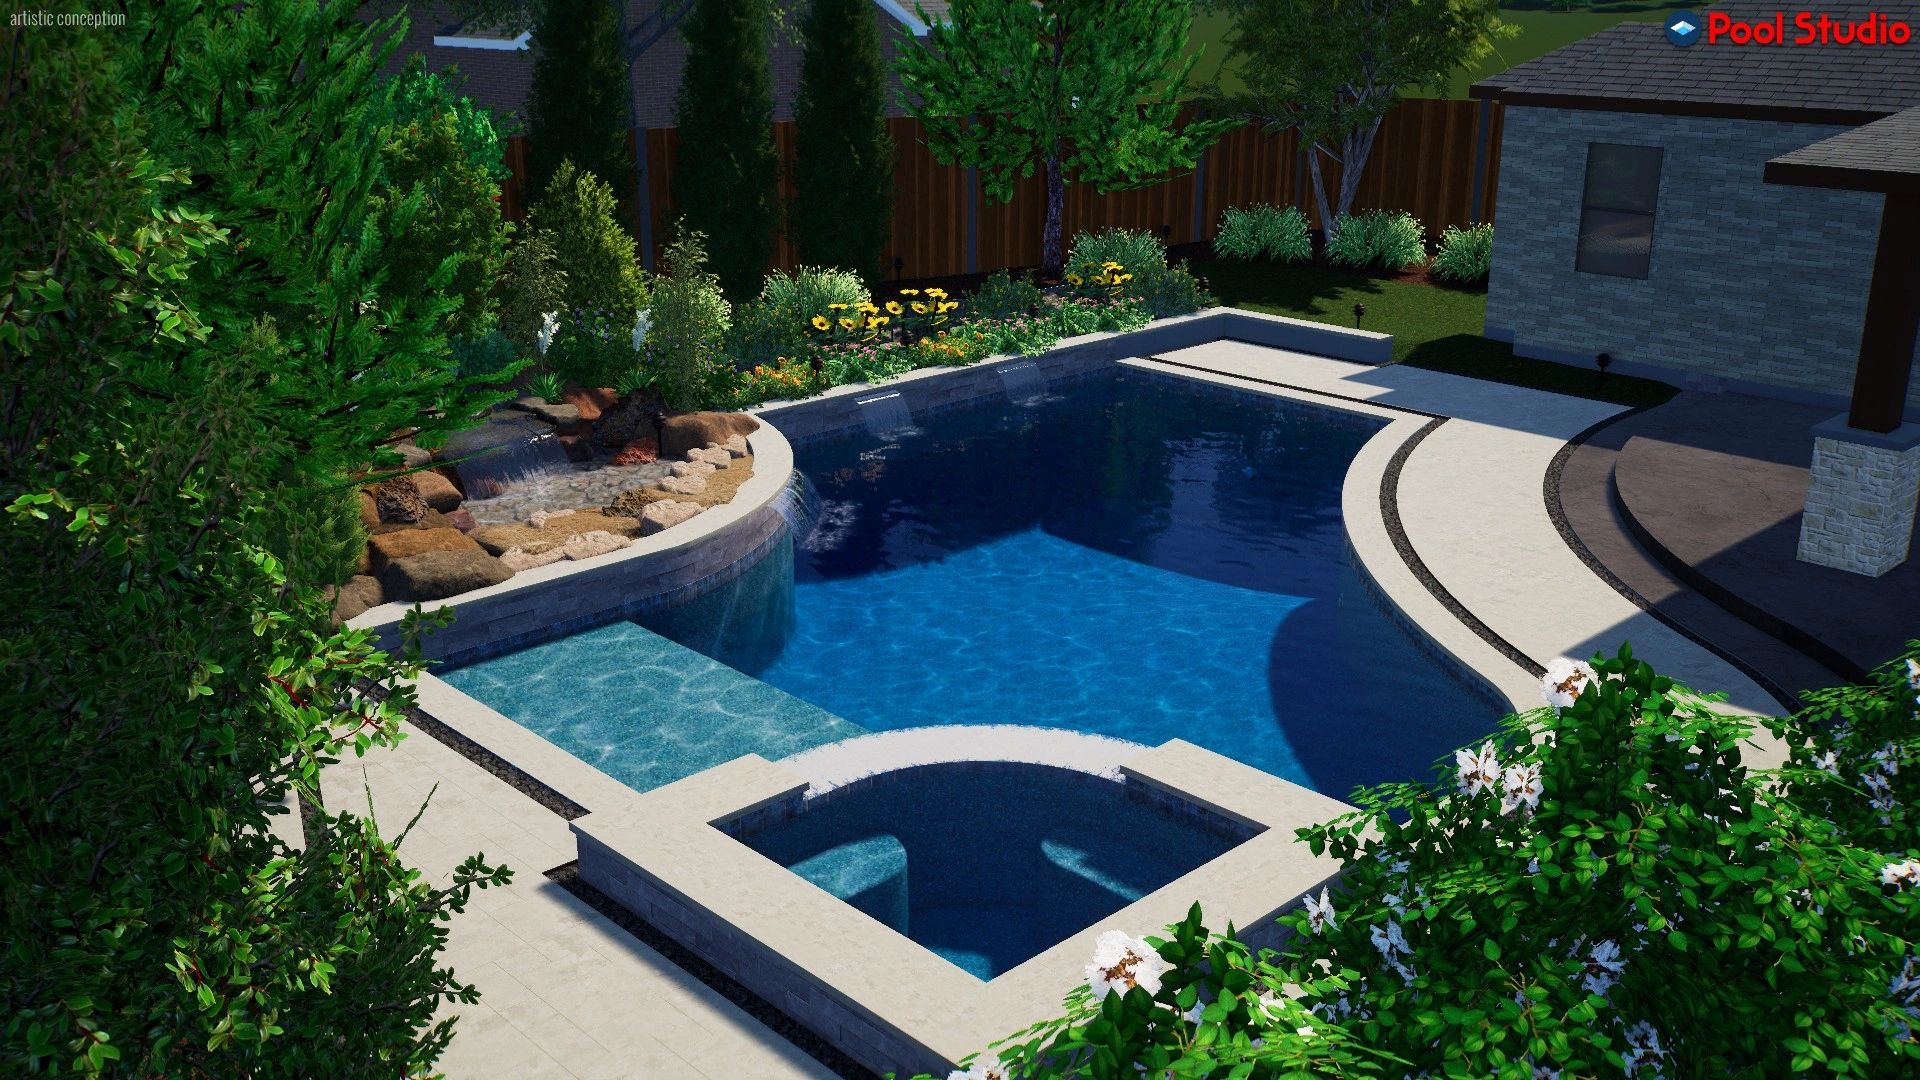 dallas richardson build a new pool 2 Arlington Pool Builders and Construction